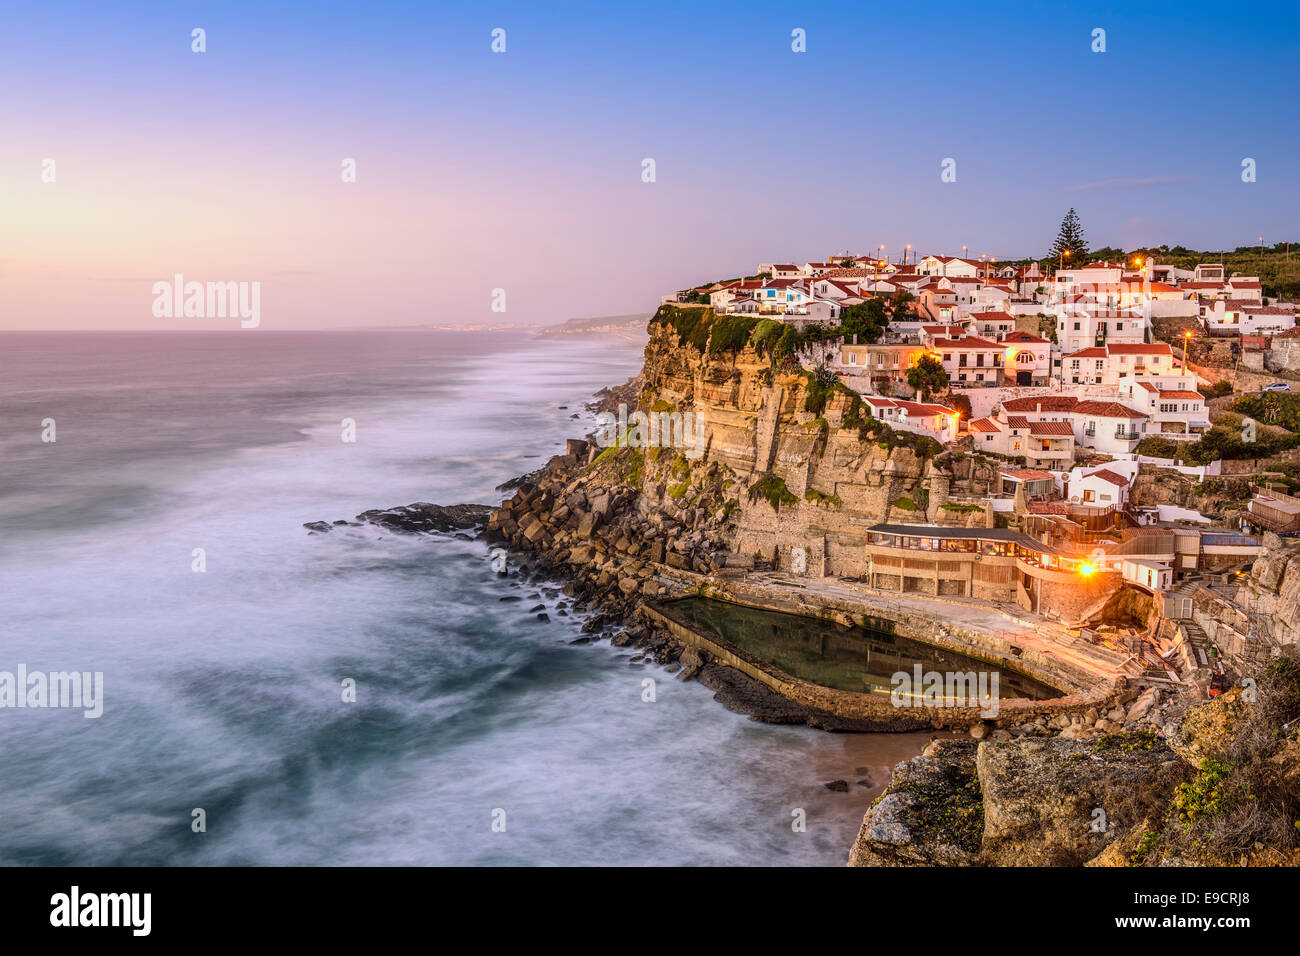 Azenhas do Mar, Sintra, Portugal paisaje urbano en la costa. Foto de stock